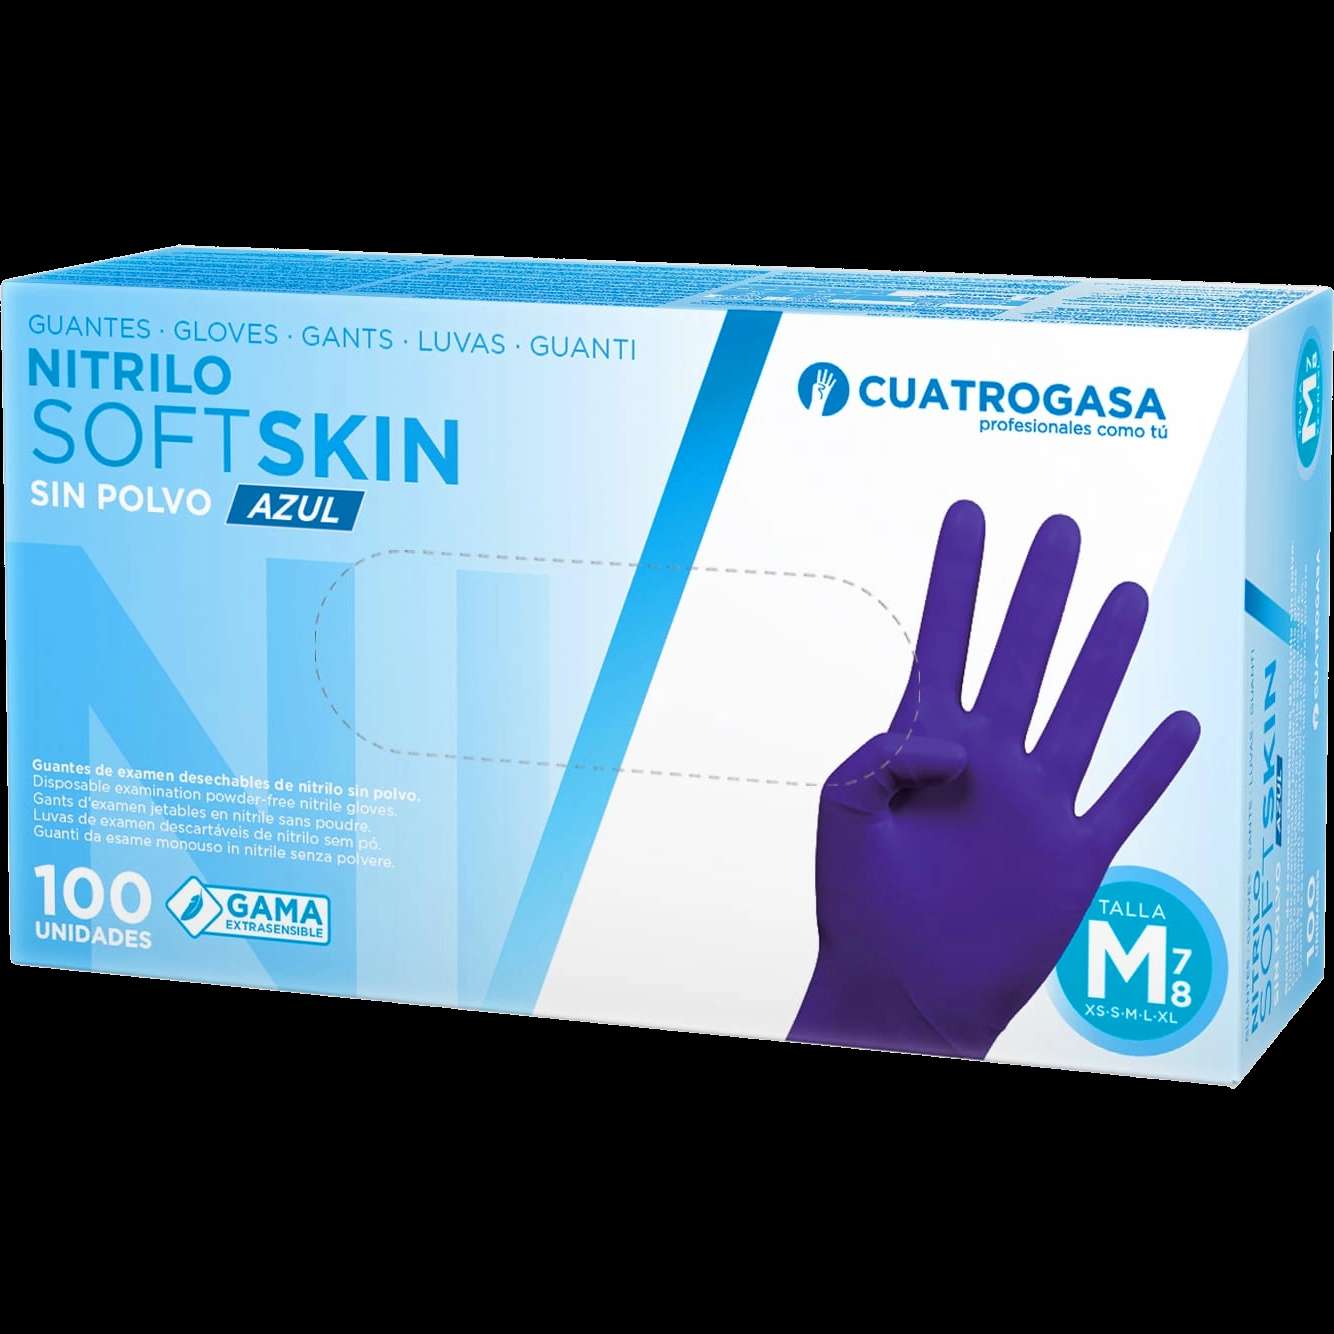 Guantes Nitrilo Soft Skin Azul - 100 uds